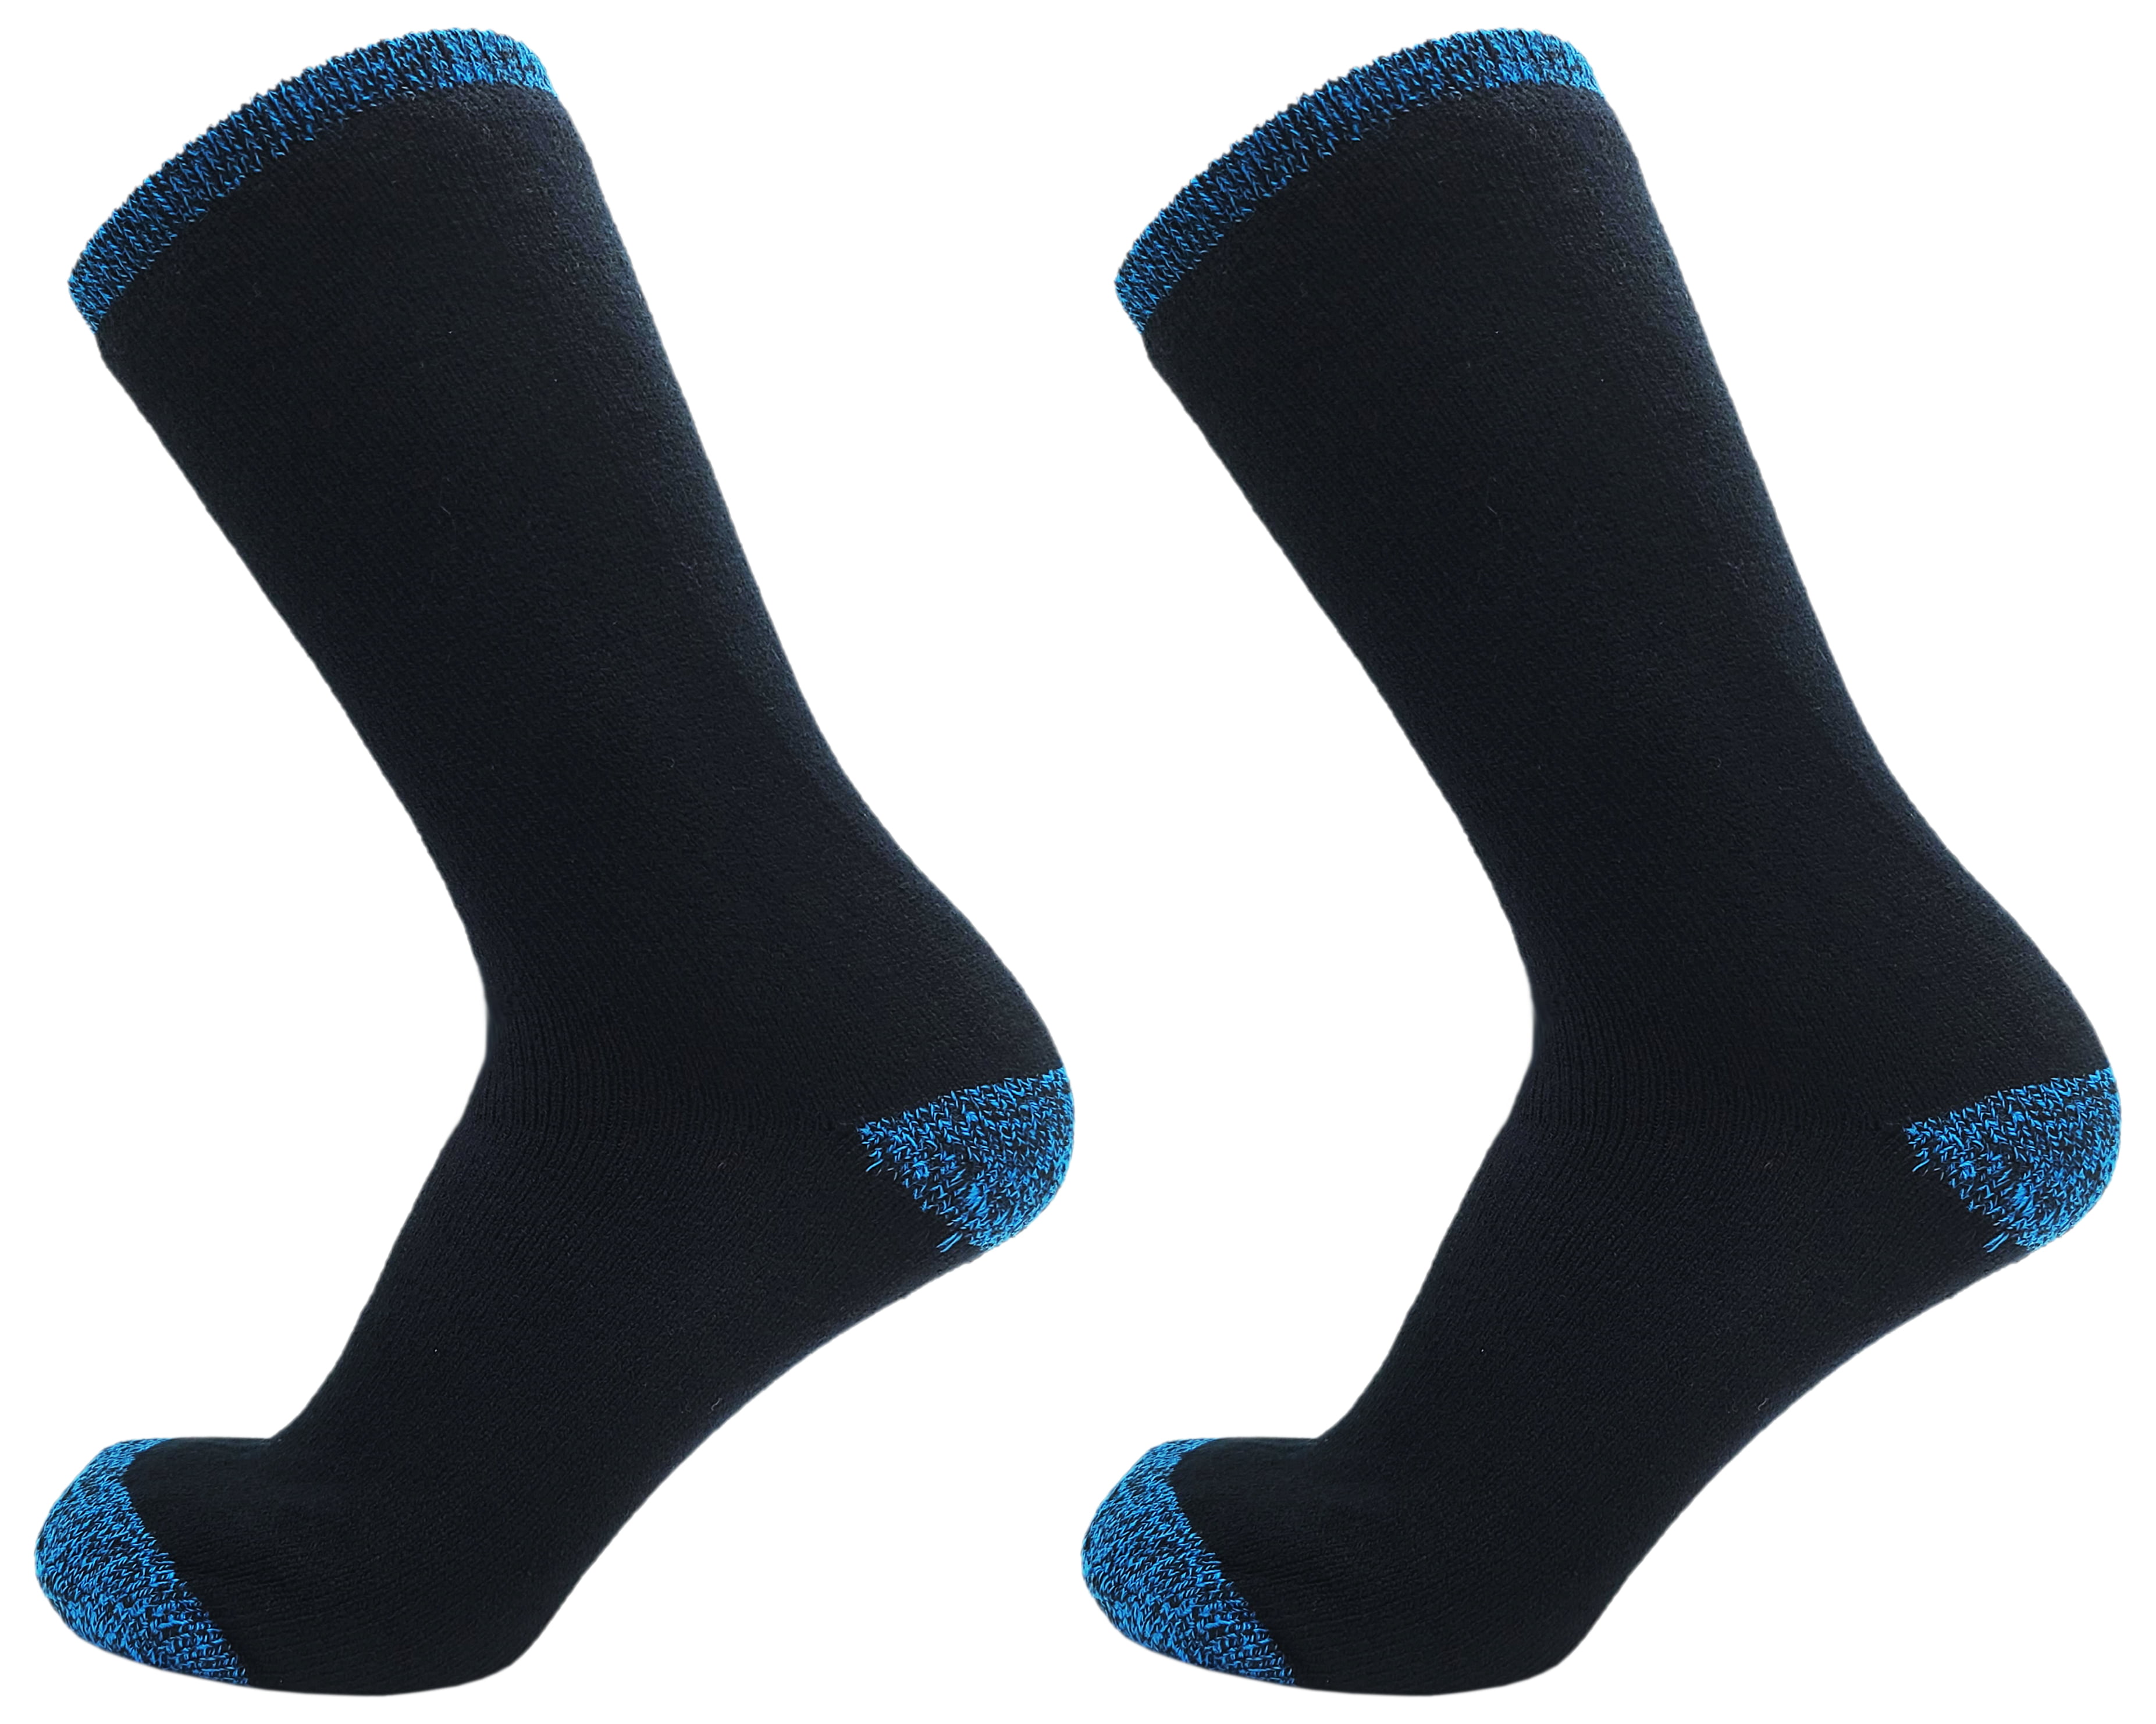 JSPA Unisex Thick Insulated Heated Winter Heavy Crew Socks 1 Pair Warm Thermal Socks 